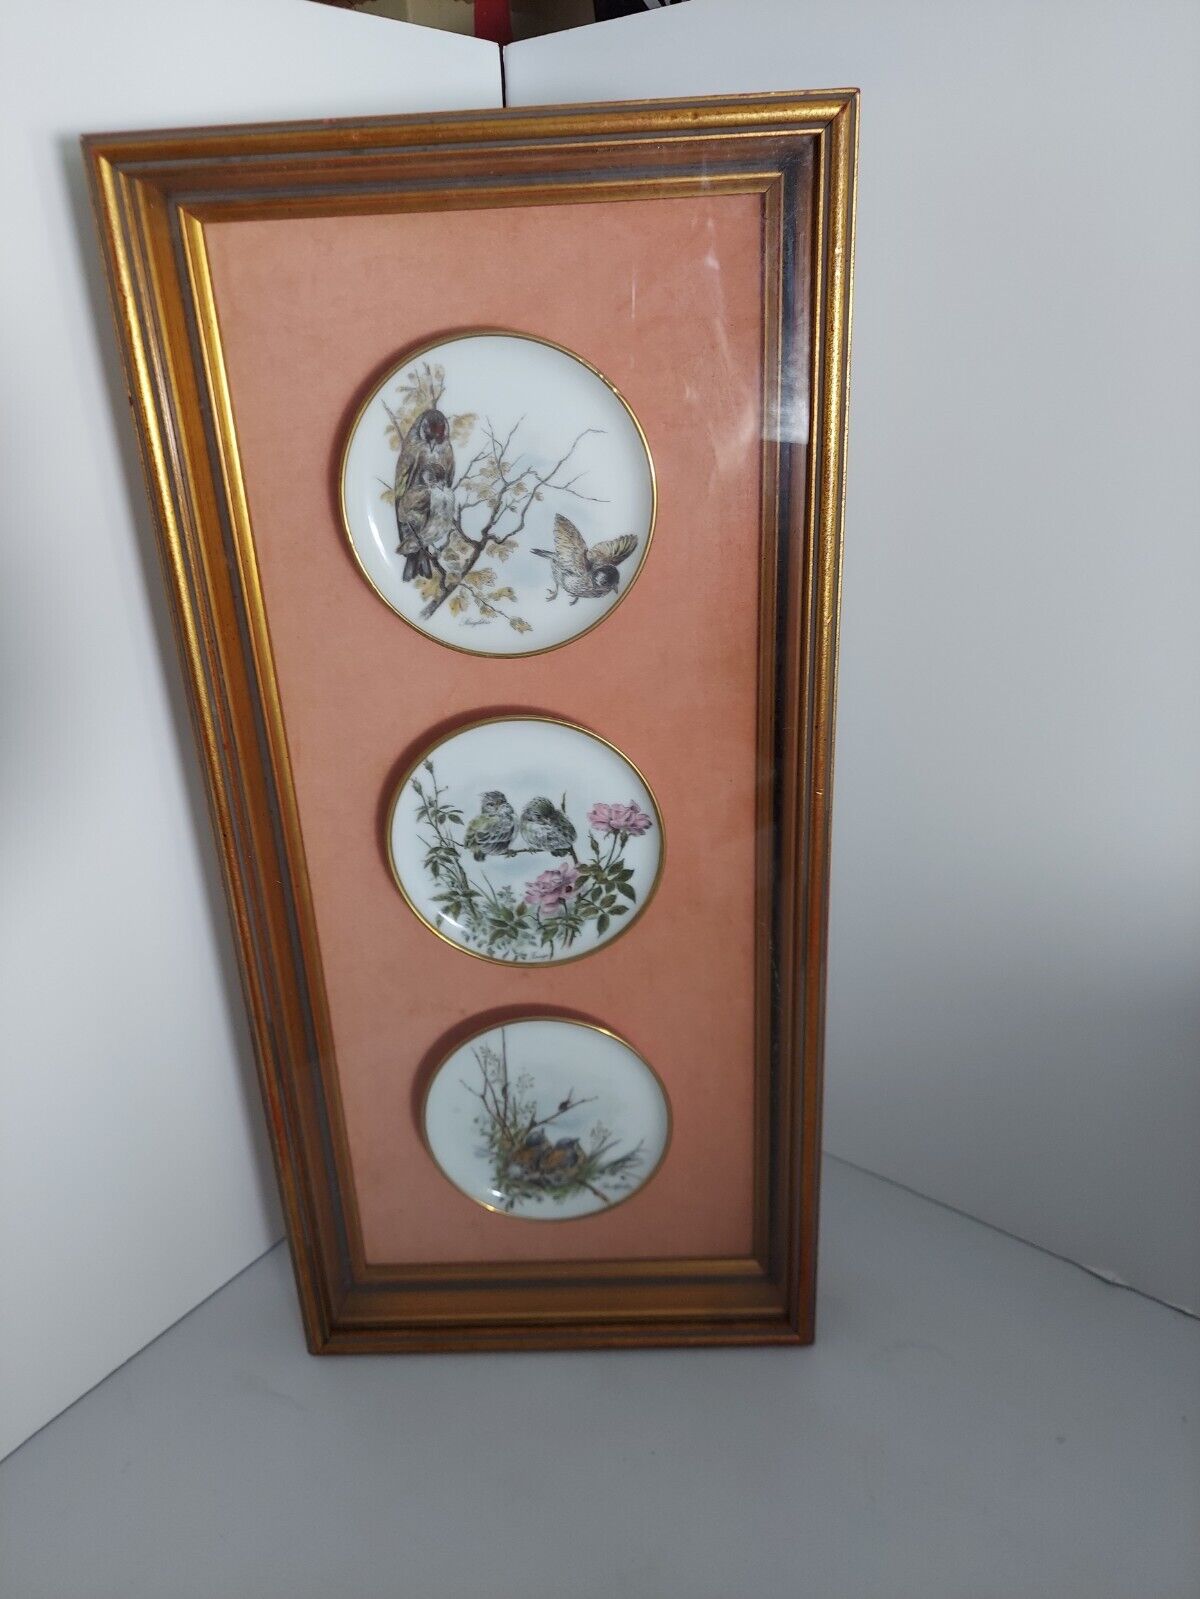 VTG-Gloria Bayreuth Bavarian Porcelain Plates Birds,all different in wood frame